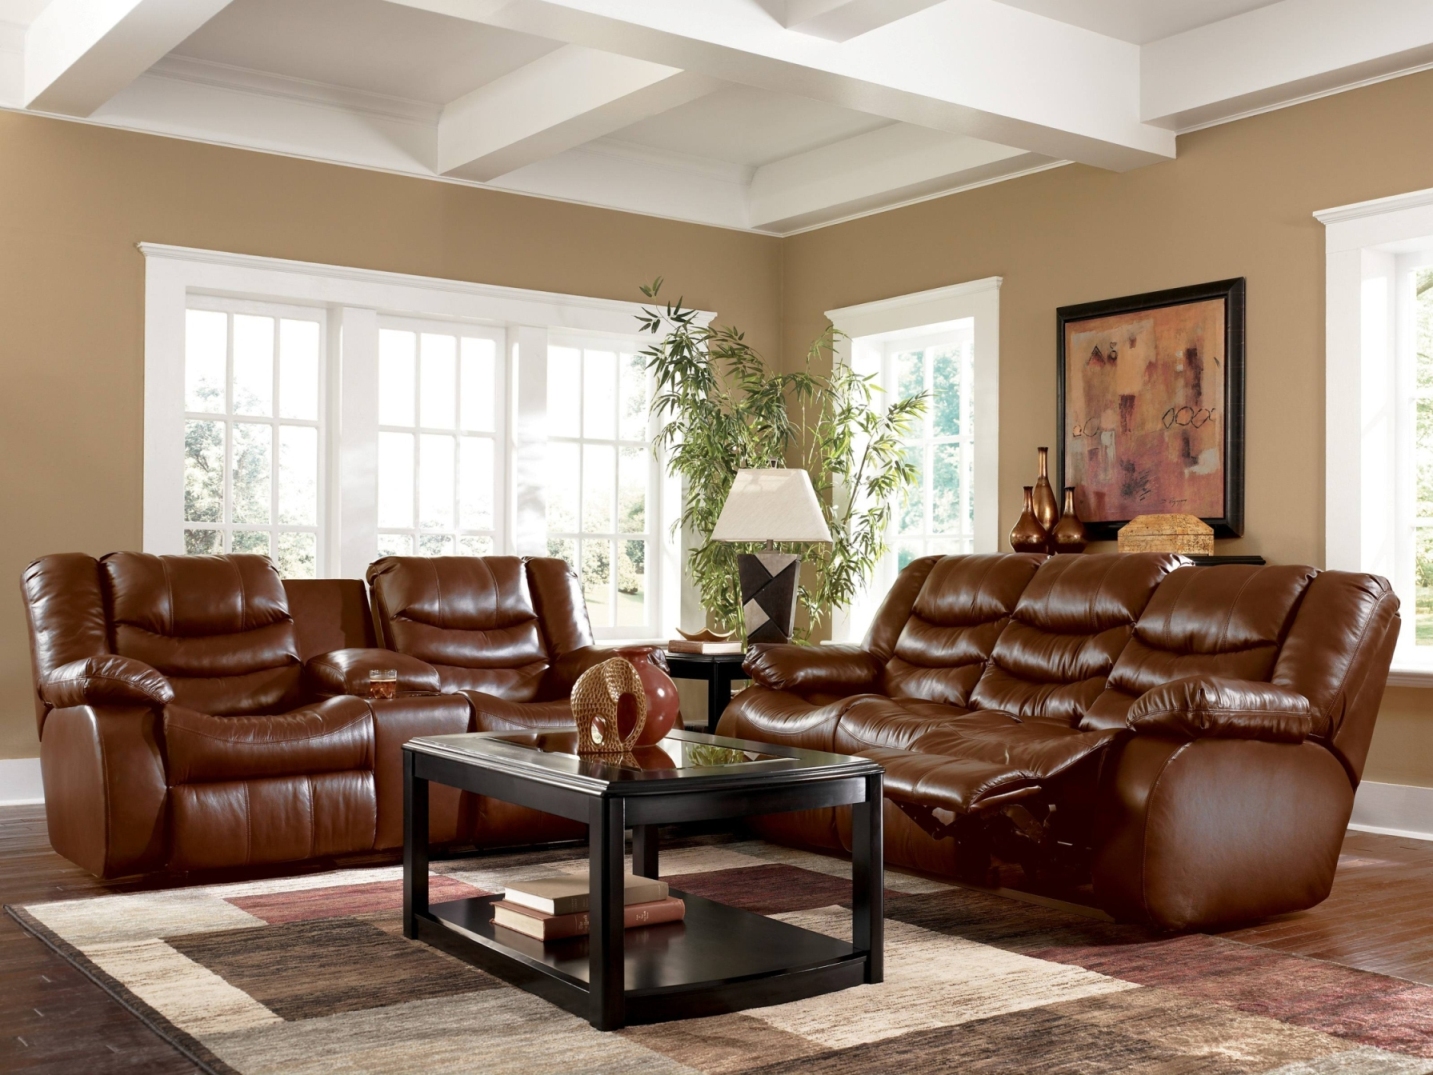 darl brown furniture living room